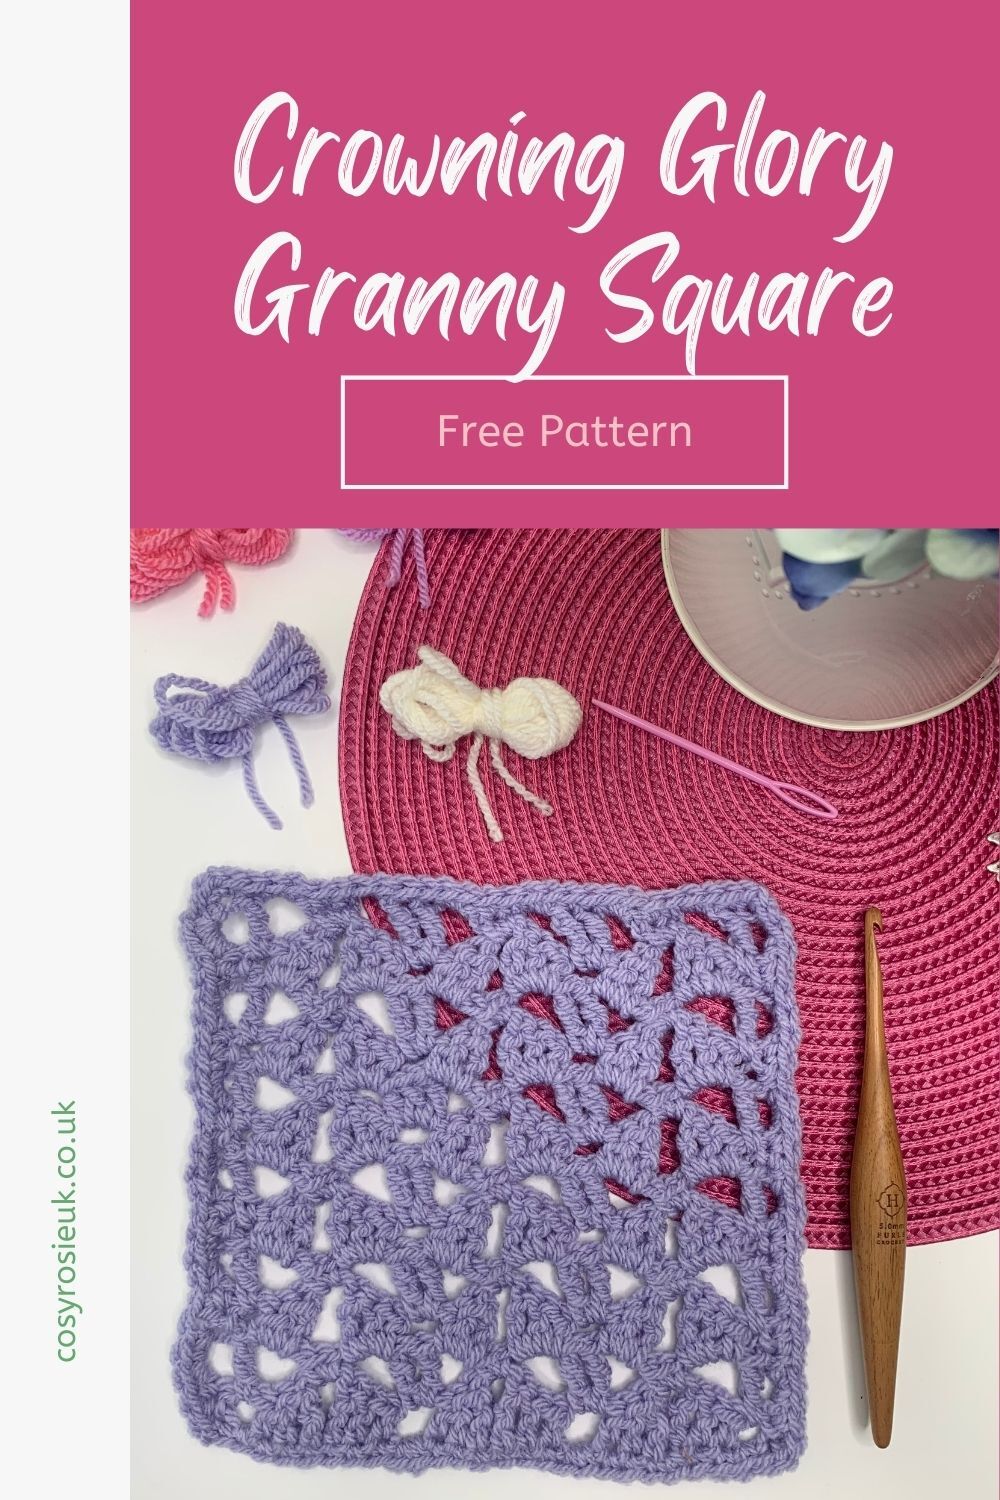 Crowning Glory Free Granny Square Pattern